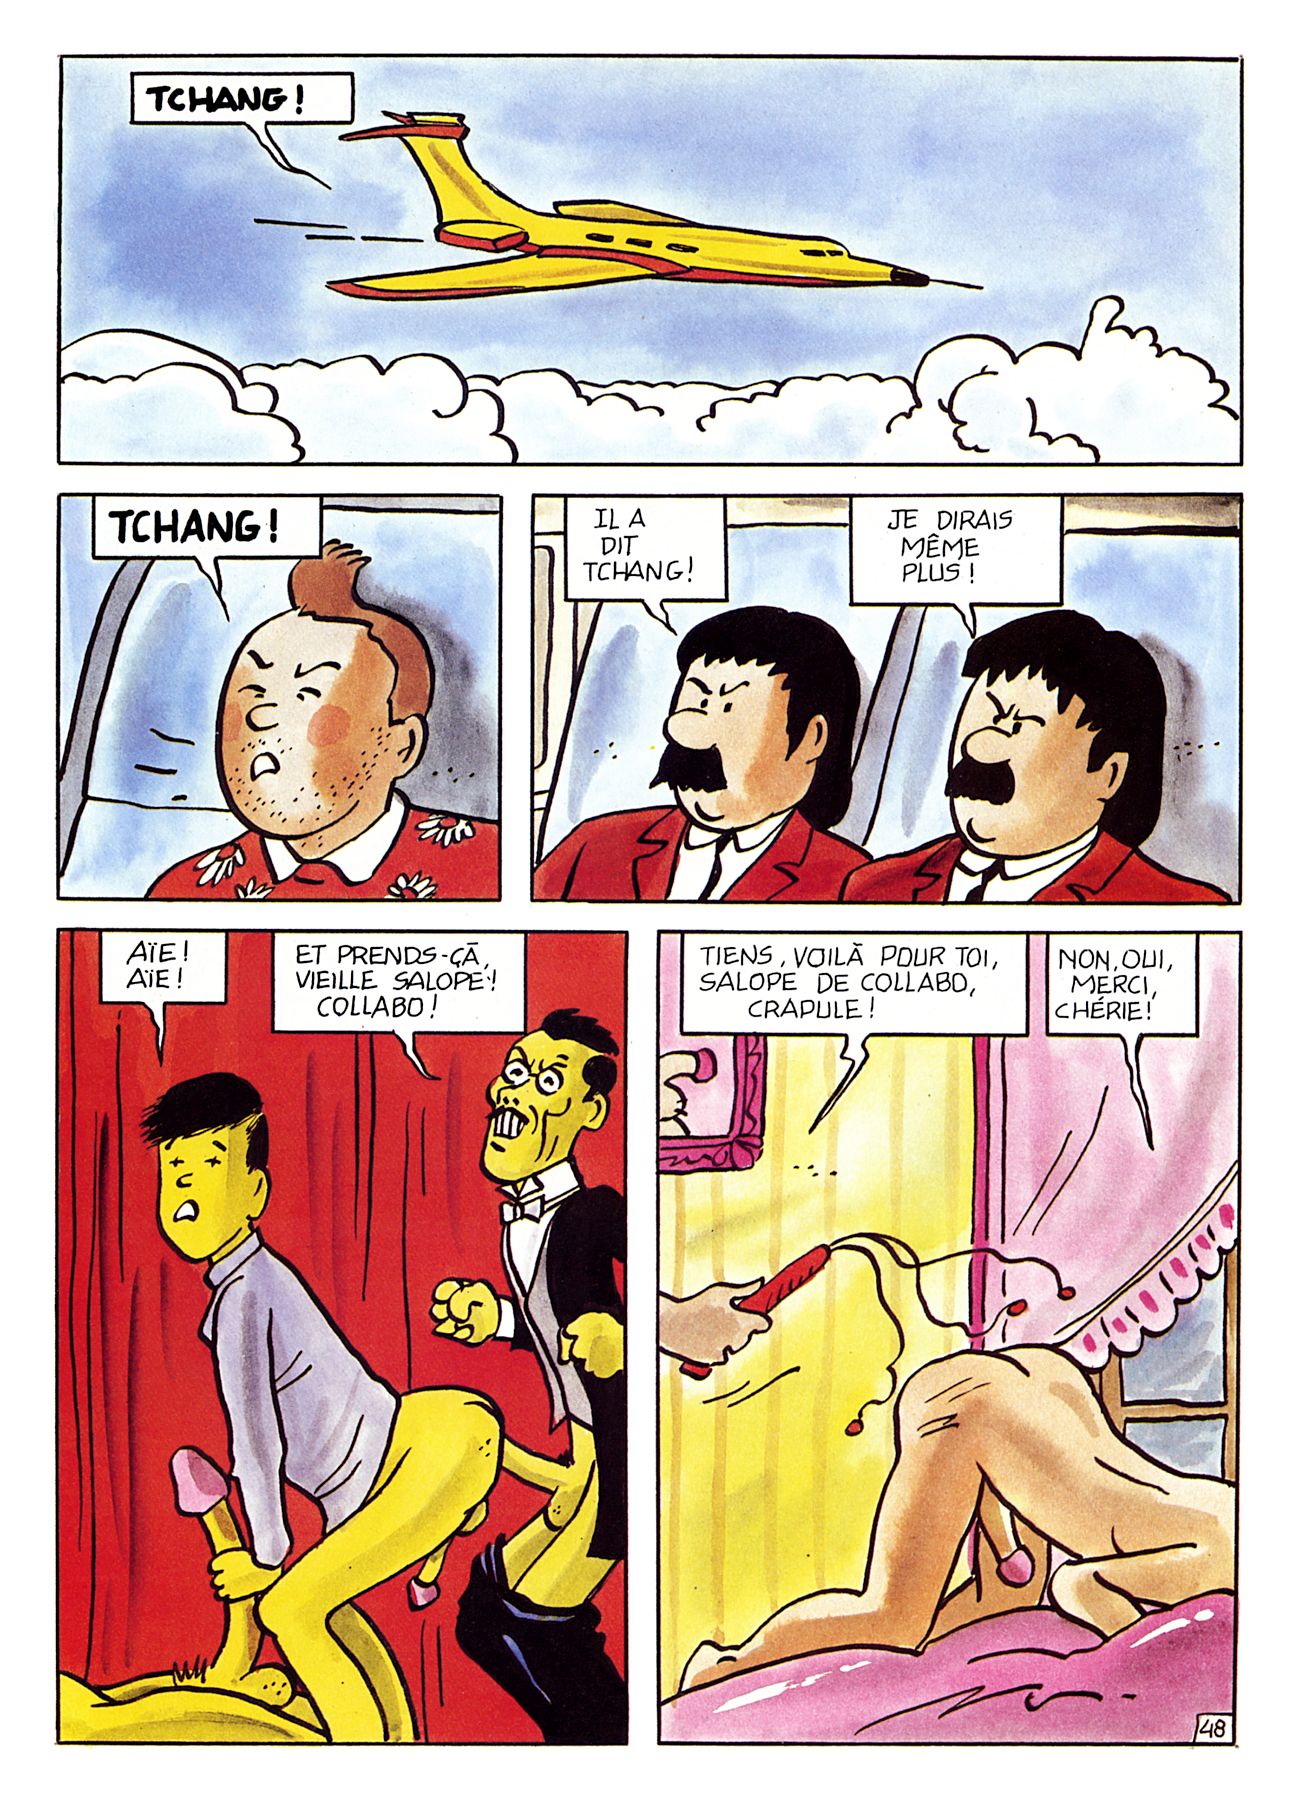 La-Vie-Sexuelle-De-Tintin-1992-All-64-pages-French-page48--Gotofap.tk--88688318.jpg